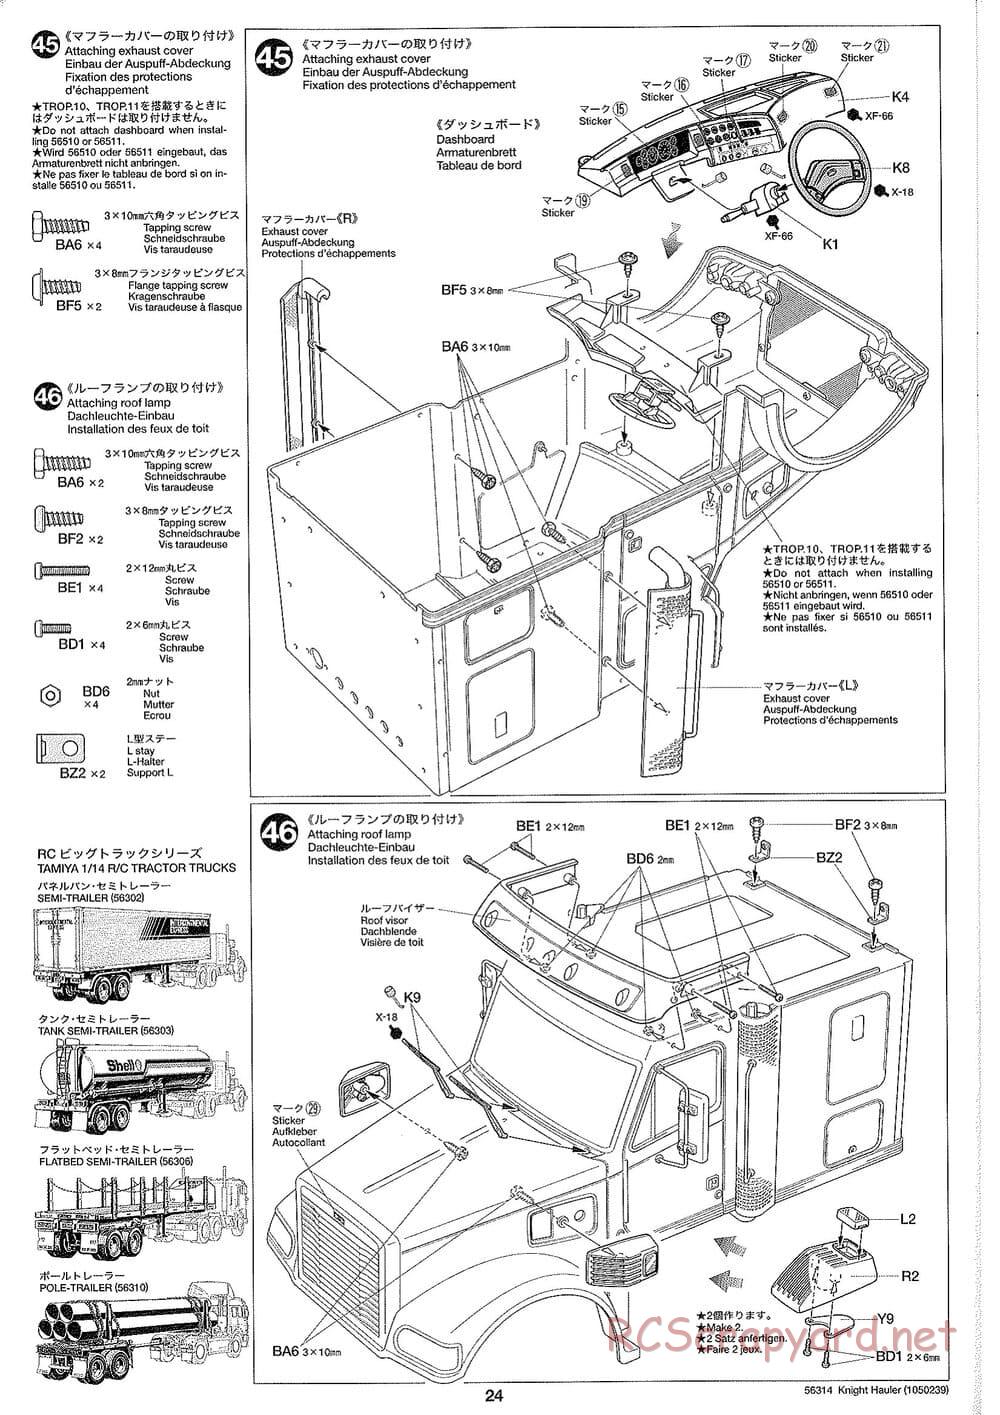 Tamiya - Knight Hauler Tractor Truck Chassis - Manual - Page 24